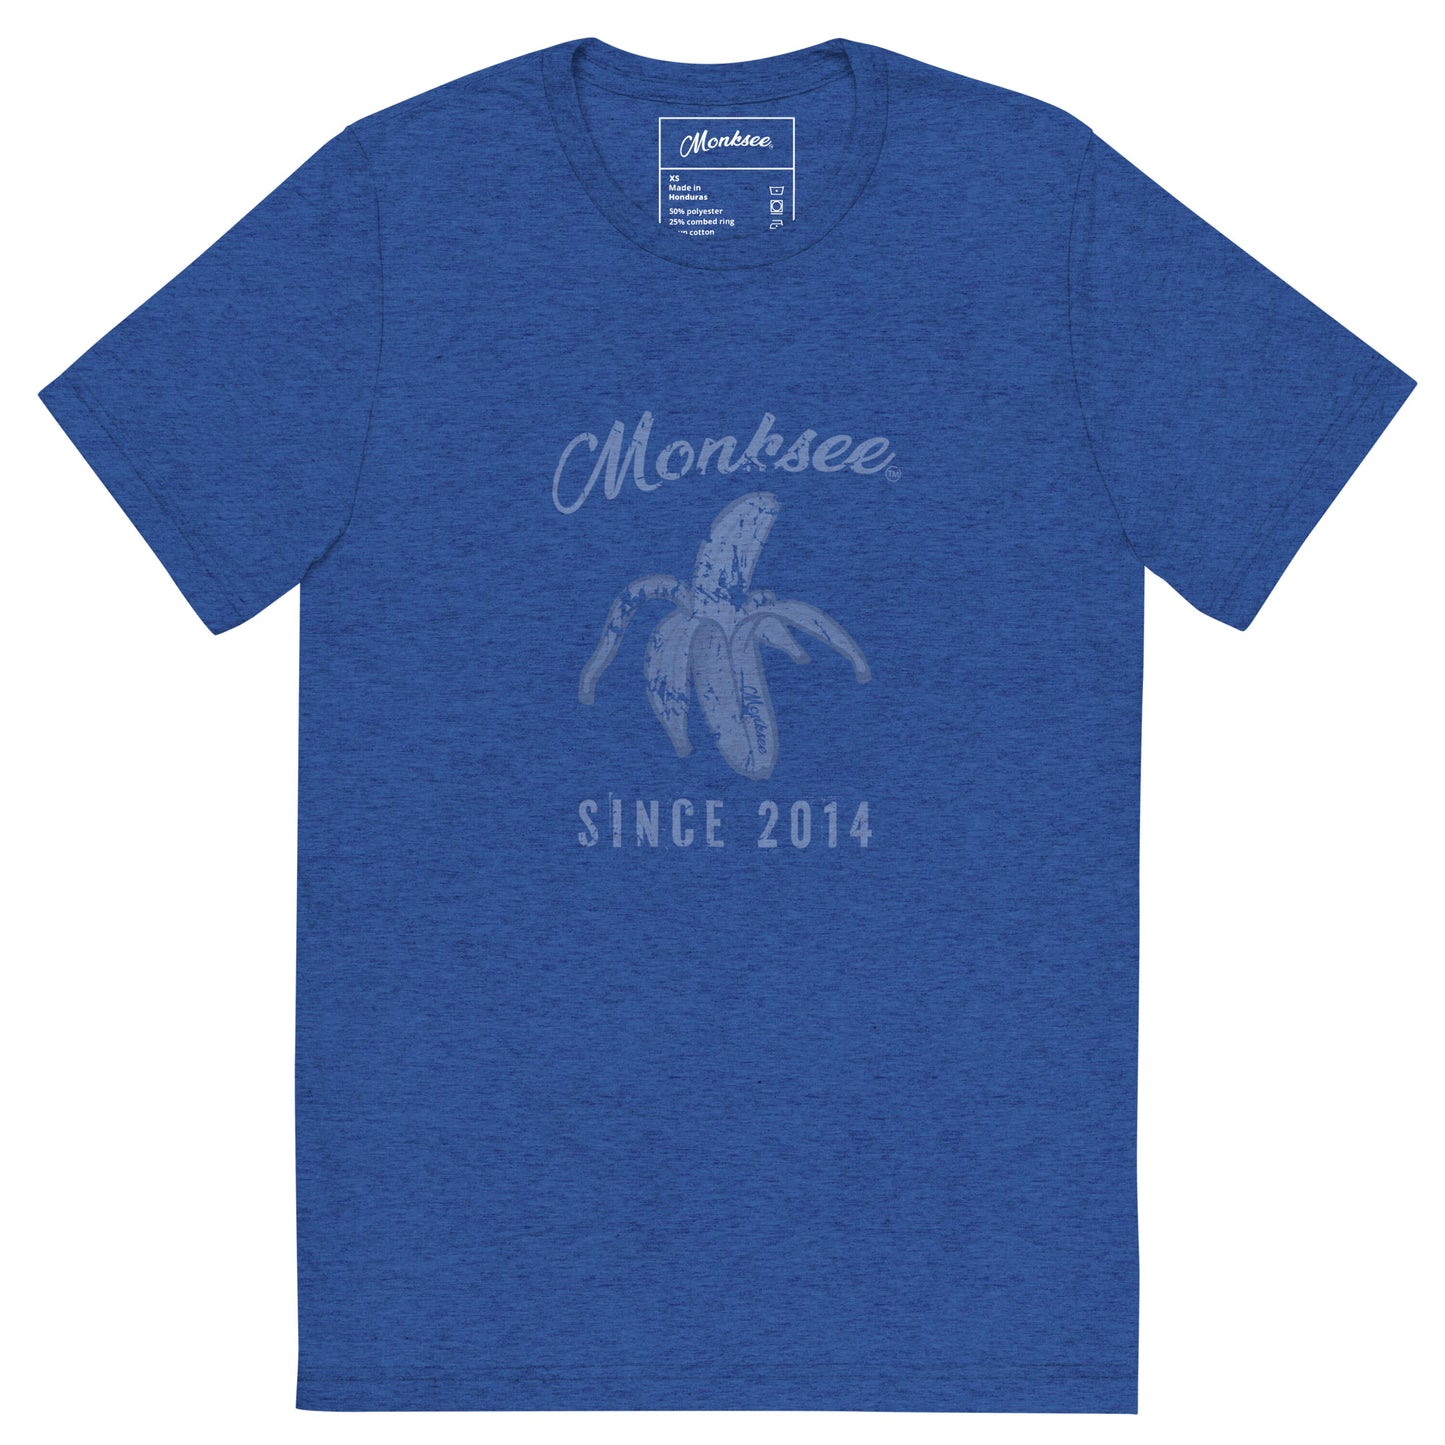 Vintage Monksee t-shirt.